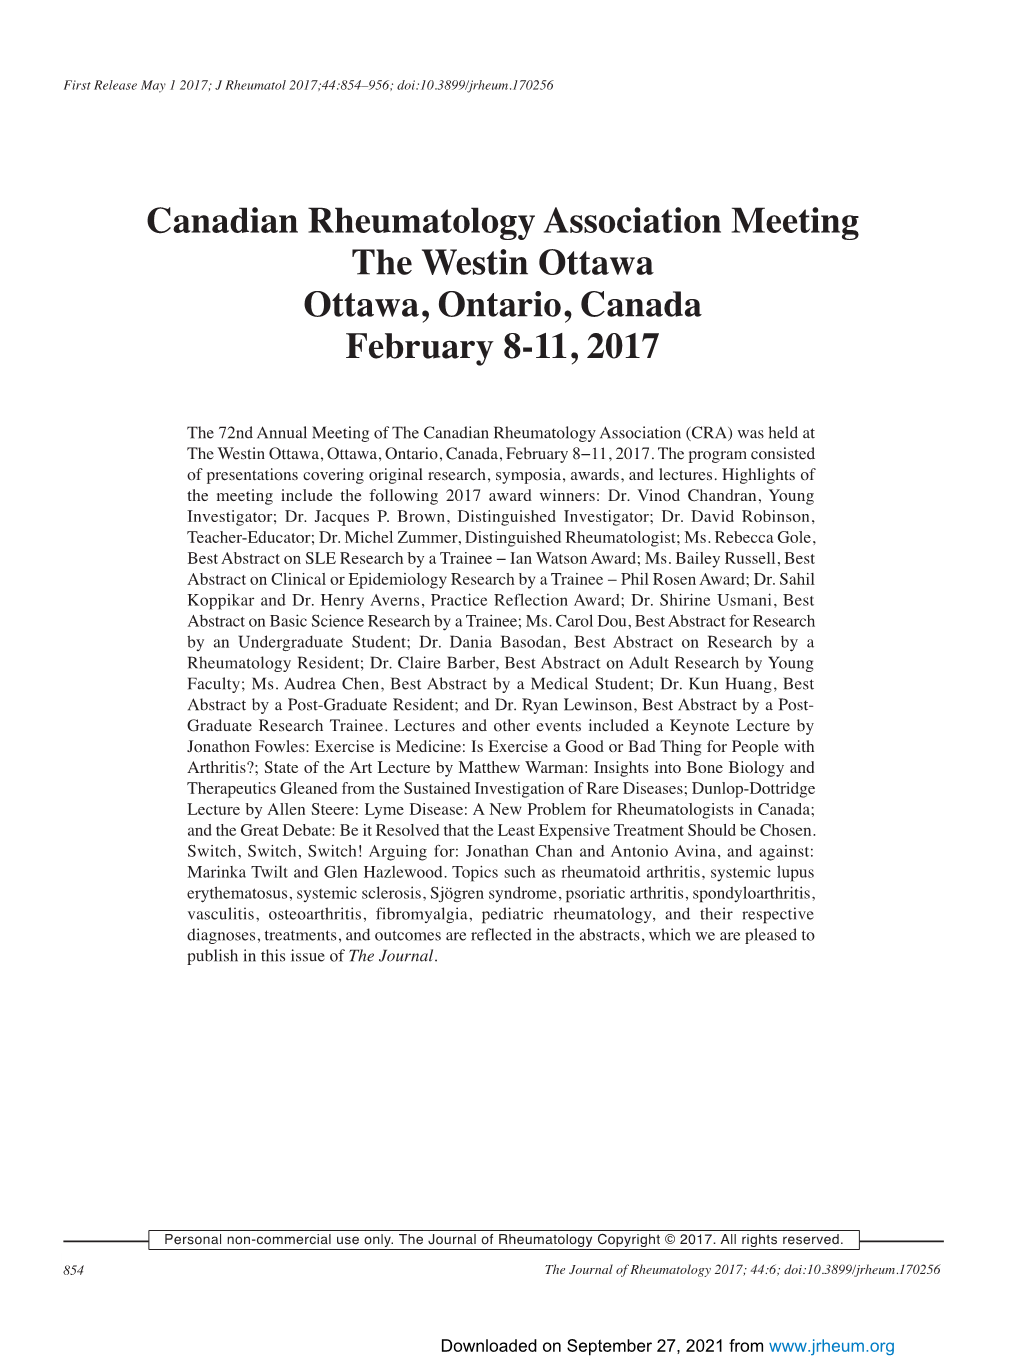 Canadian Rheumatology Association Meeting, February 8-11, 2017